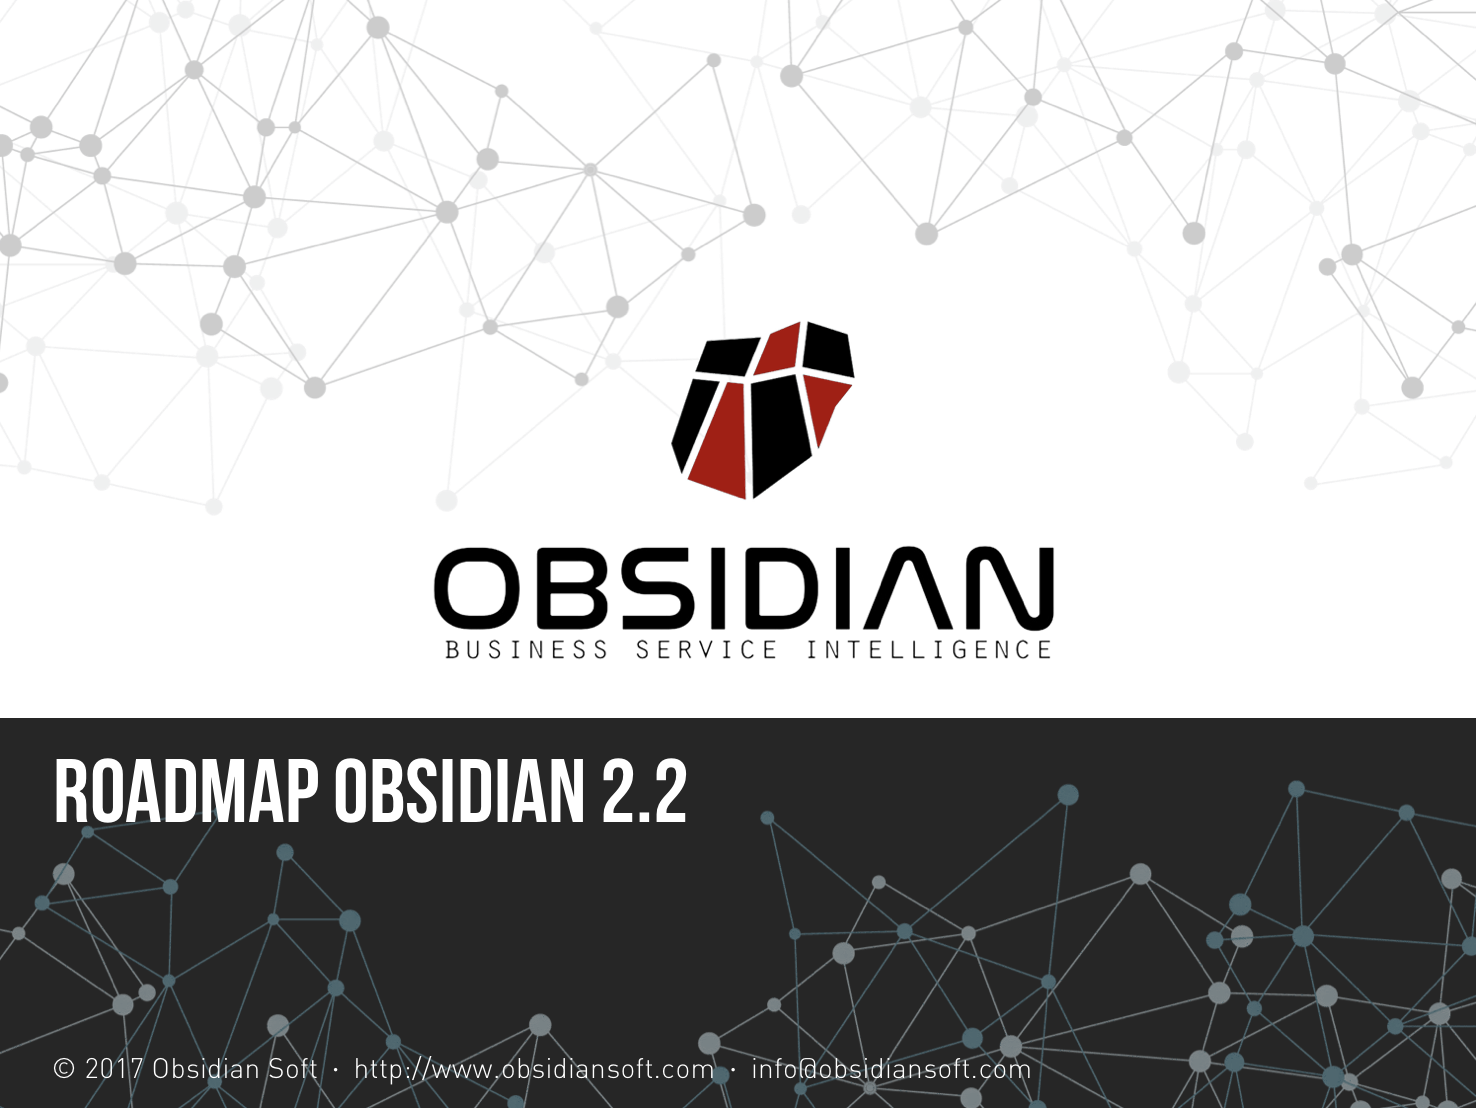 Obsidian 2.2 roadmap presentation